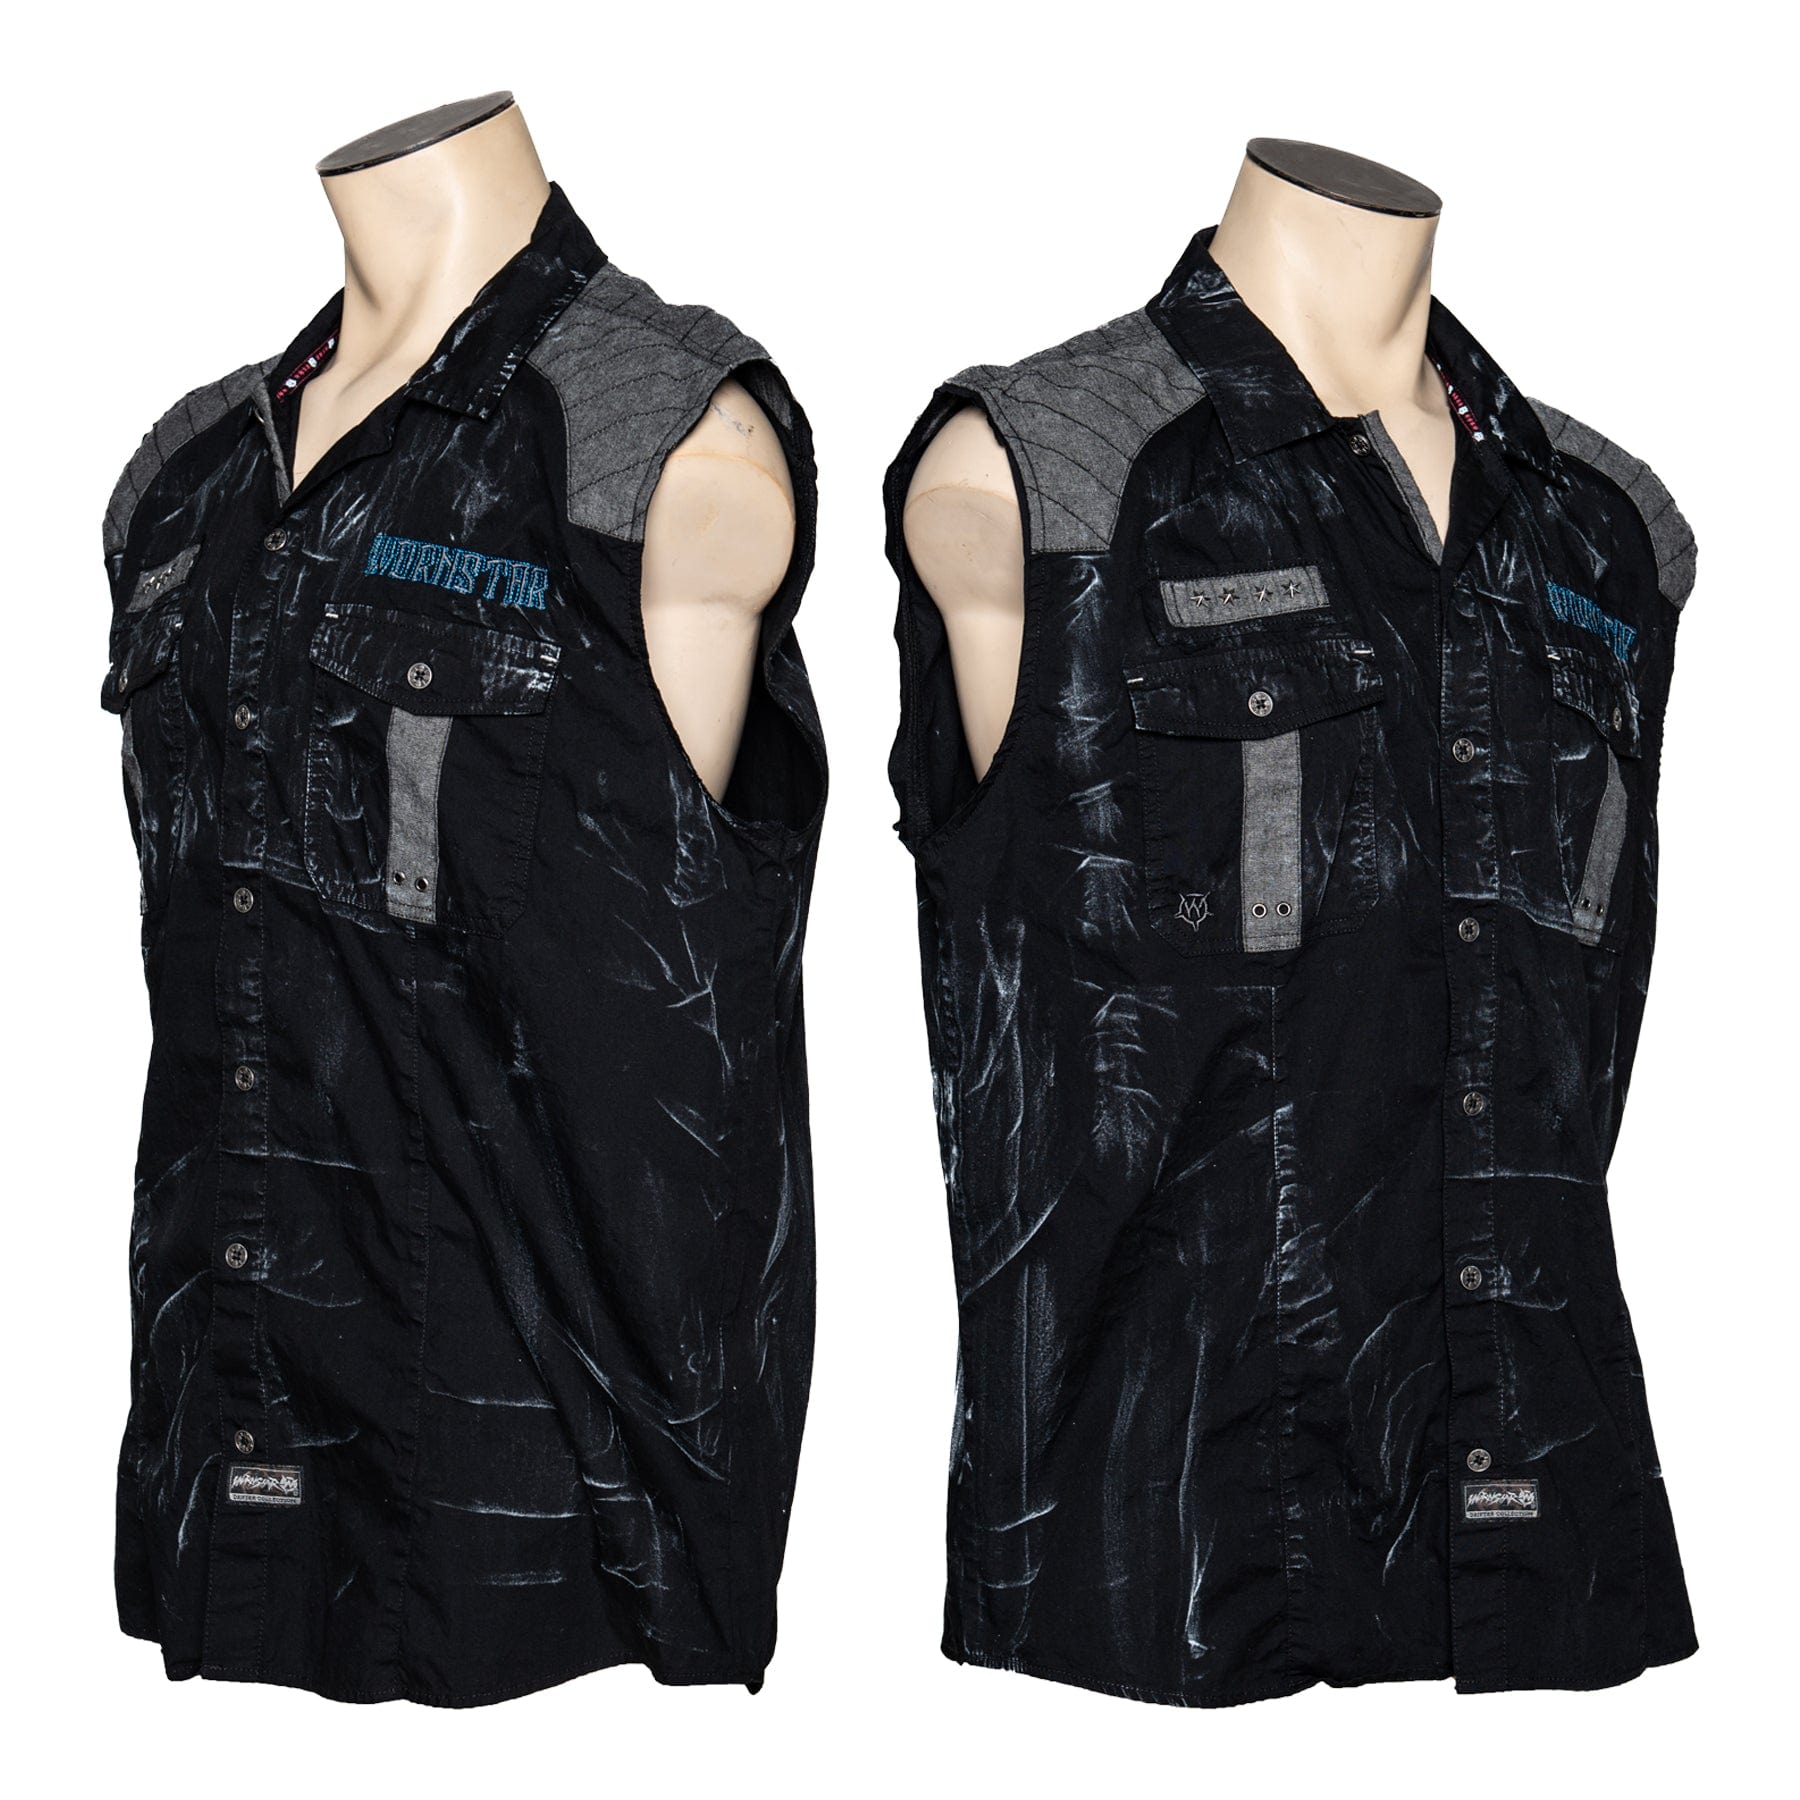 Custom Chop Shop Work Shirt Wornstar Customized Sleeveless Shirt - Disciple - Ready to ship - Size XL